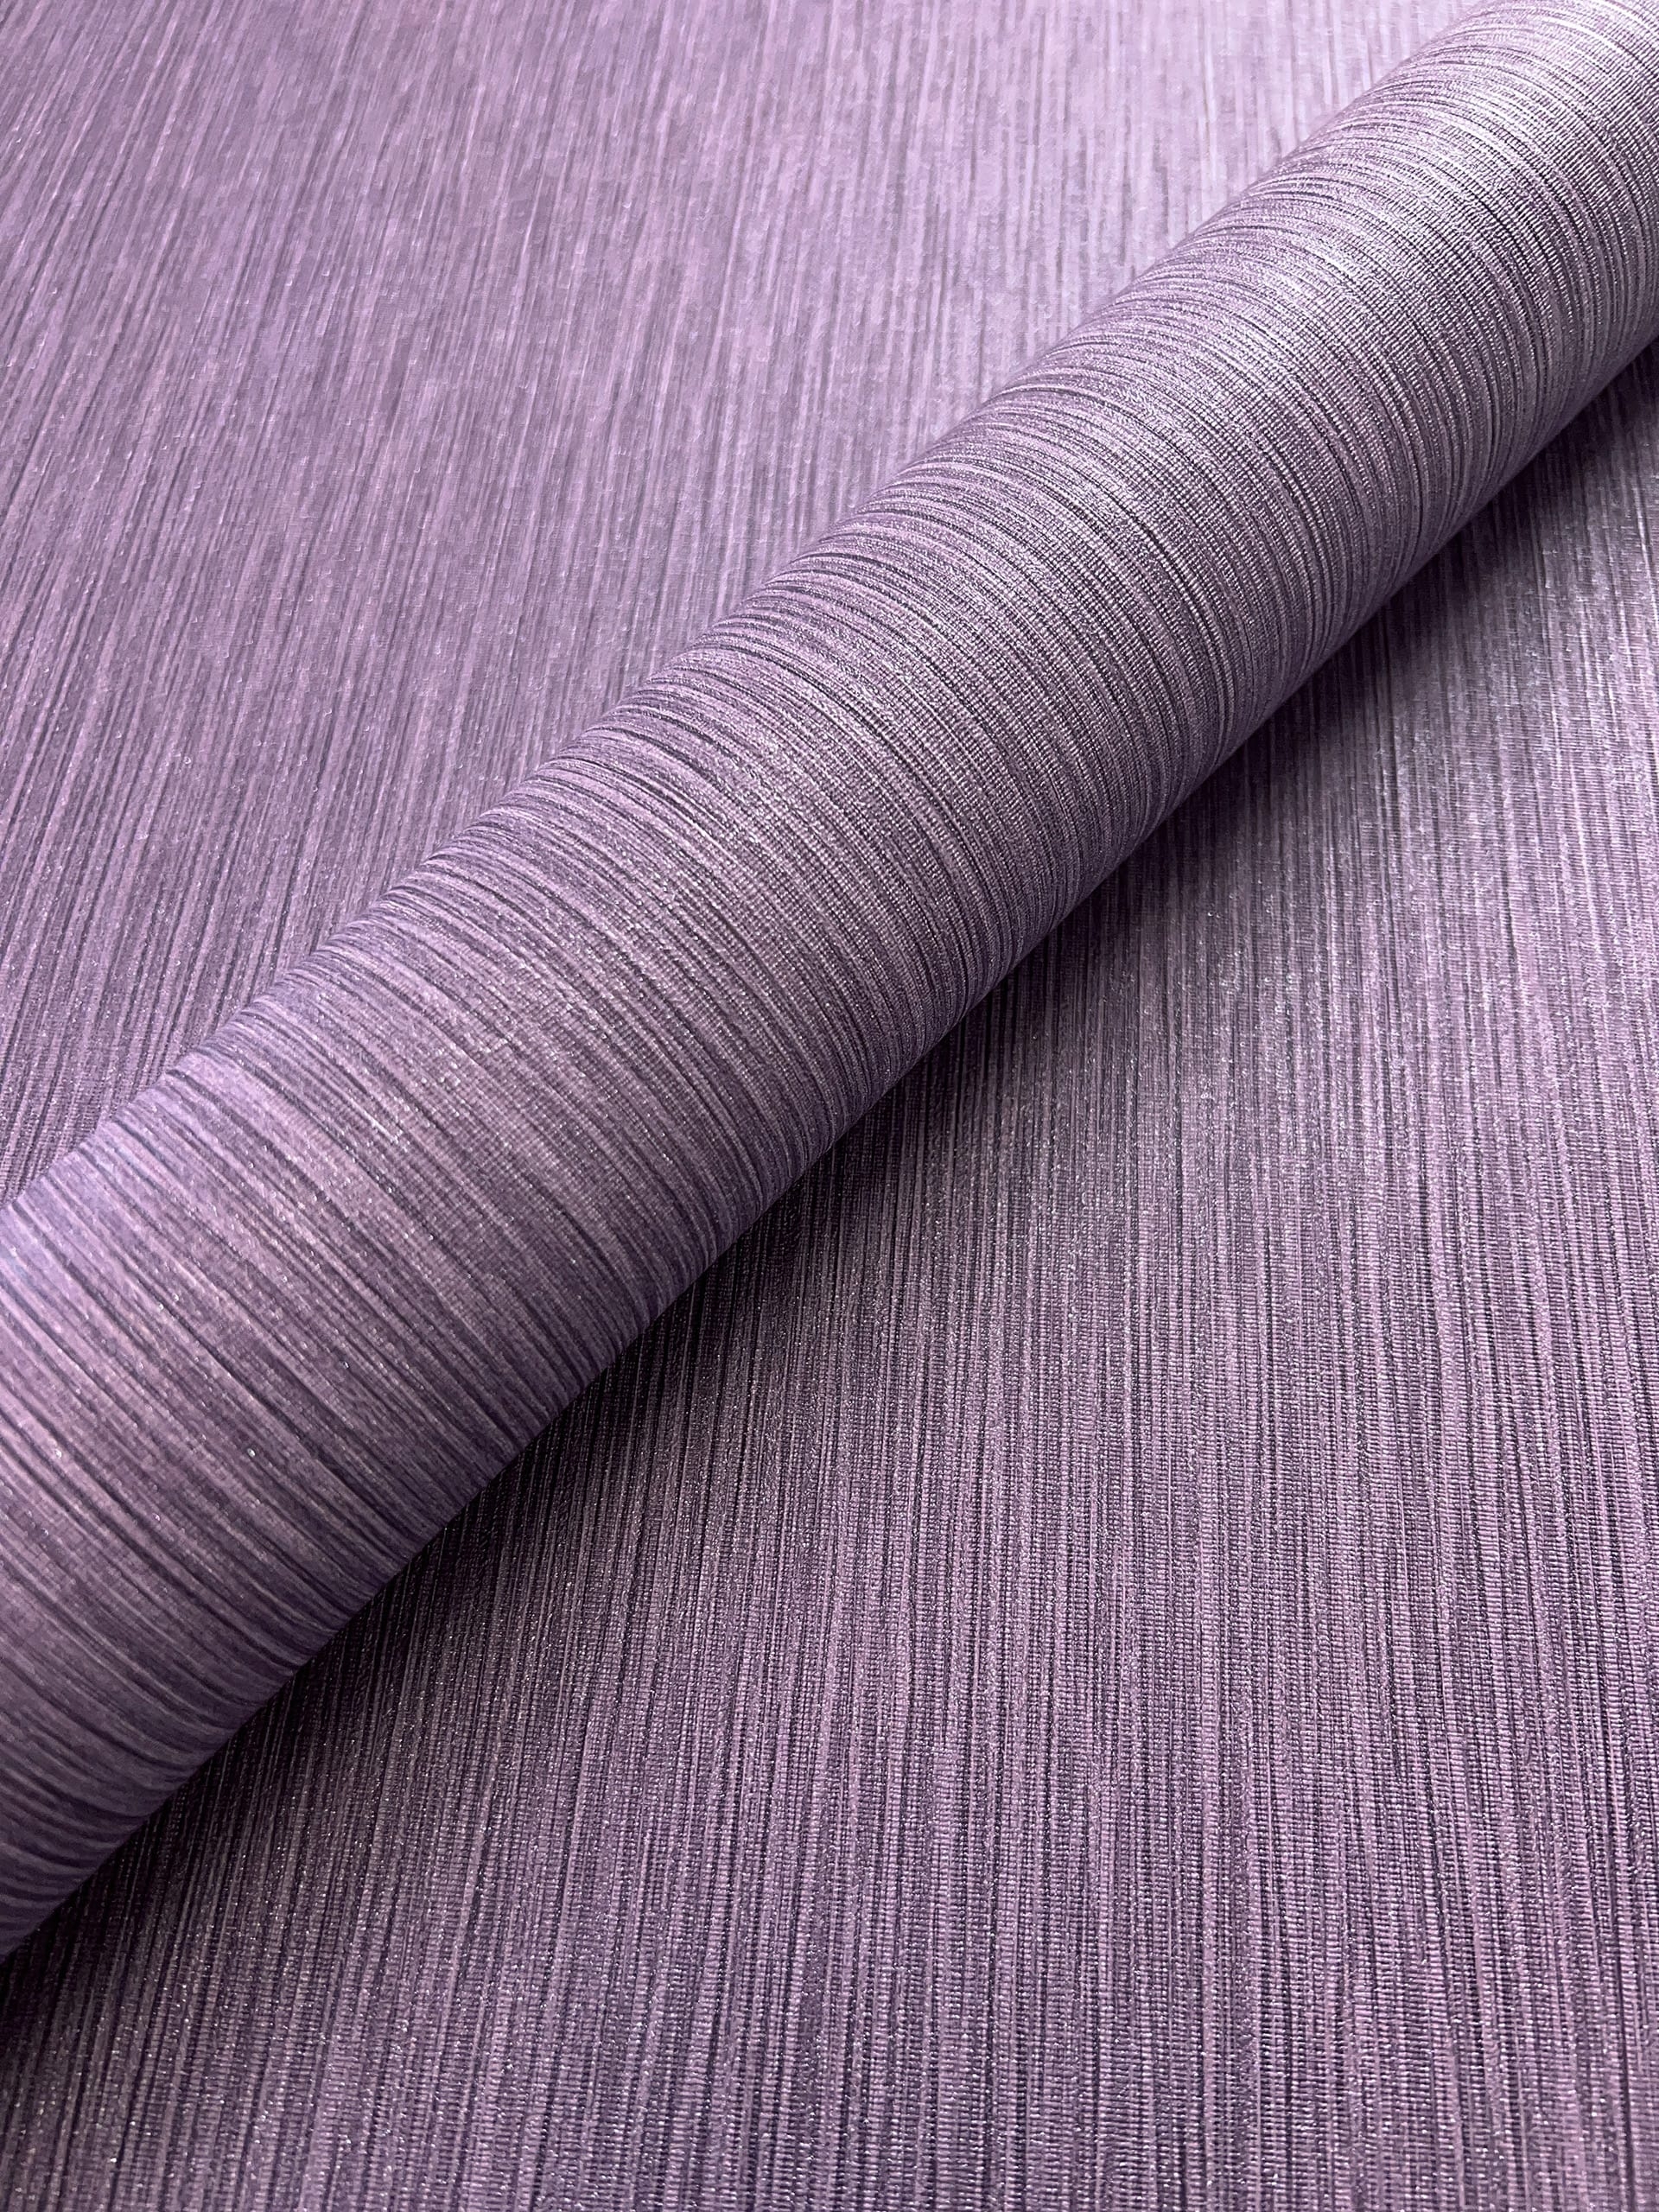 Tabris Purple